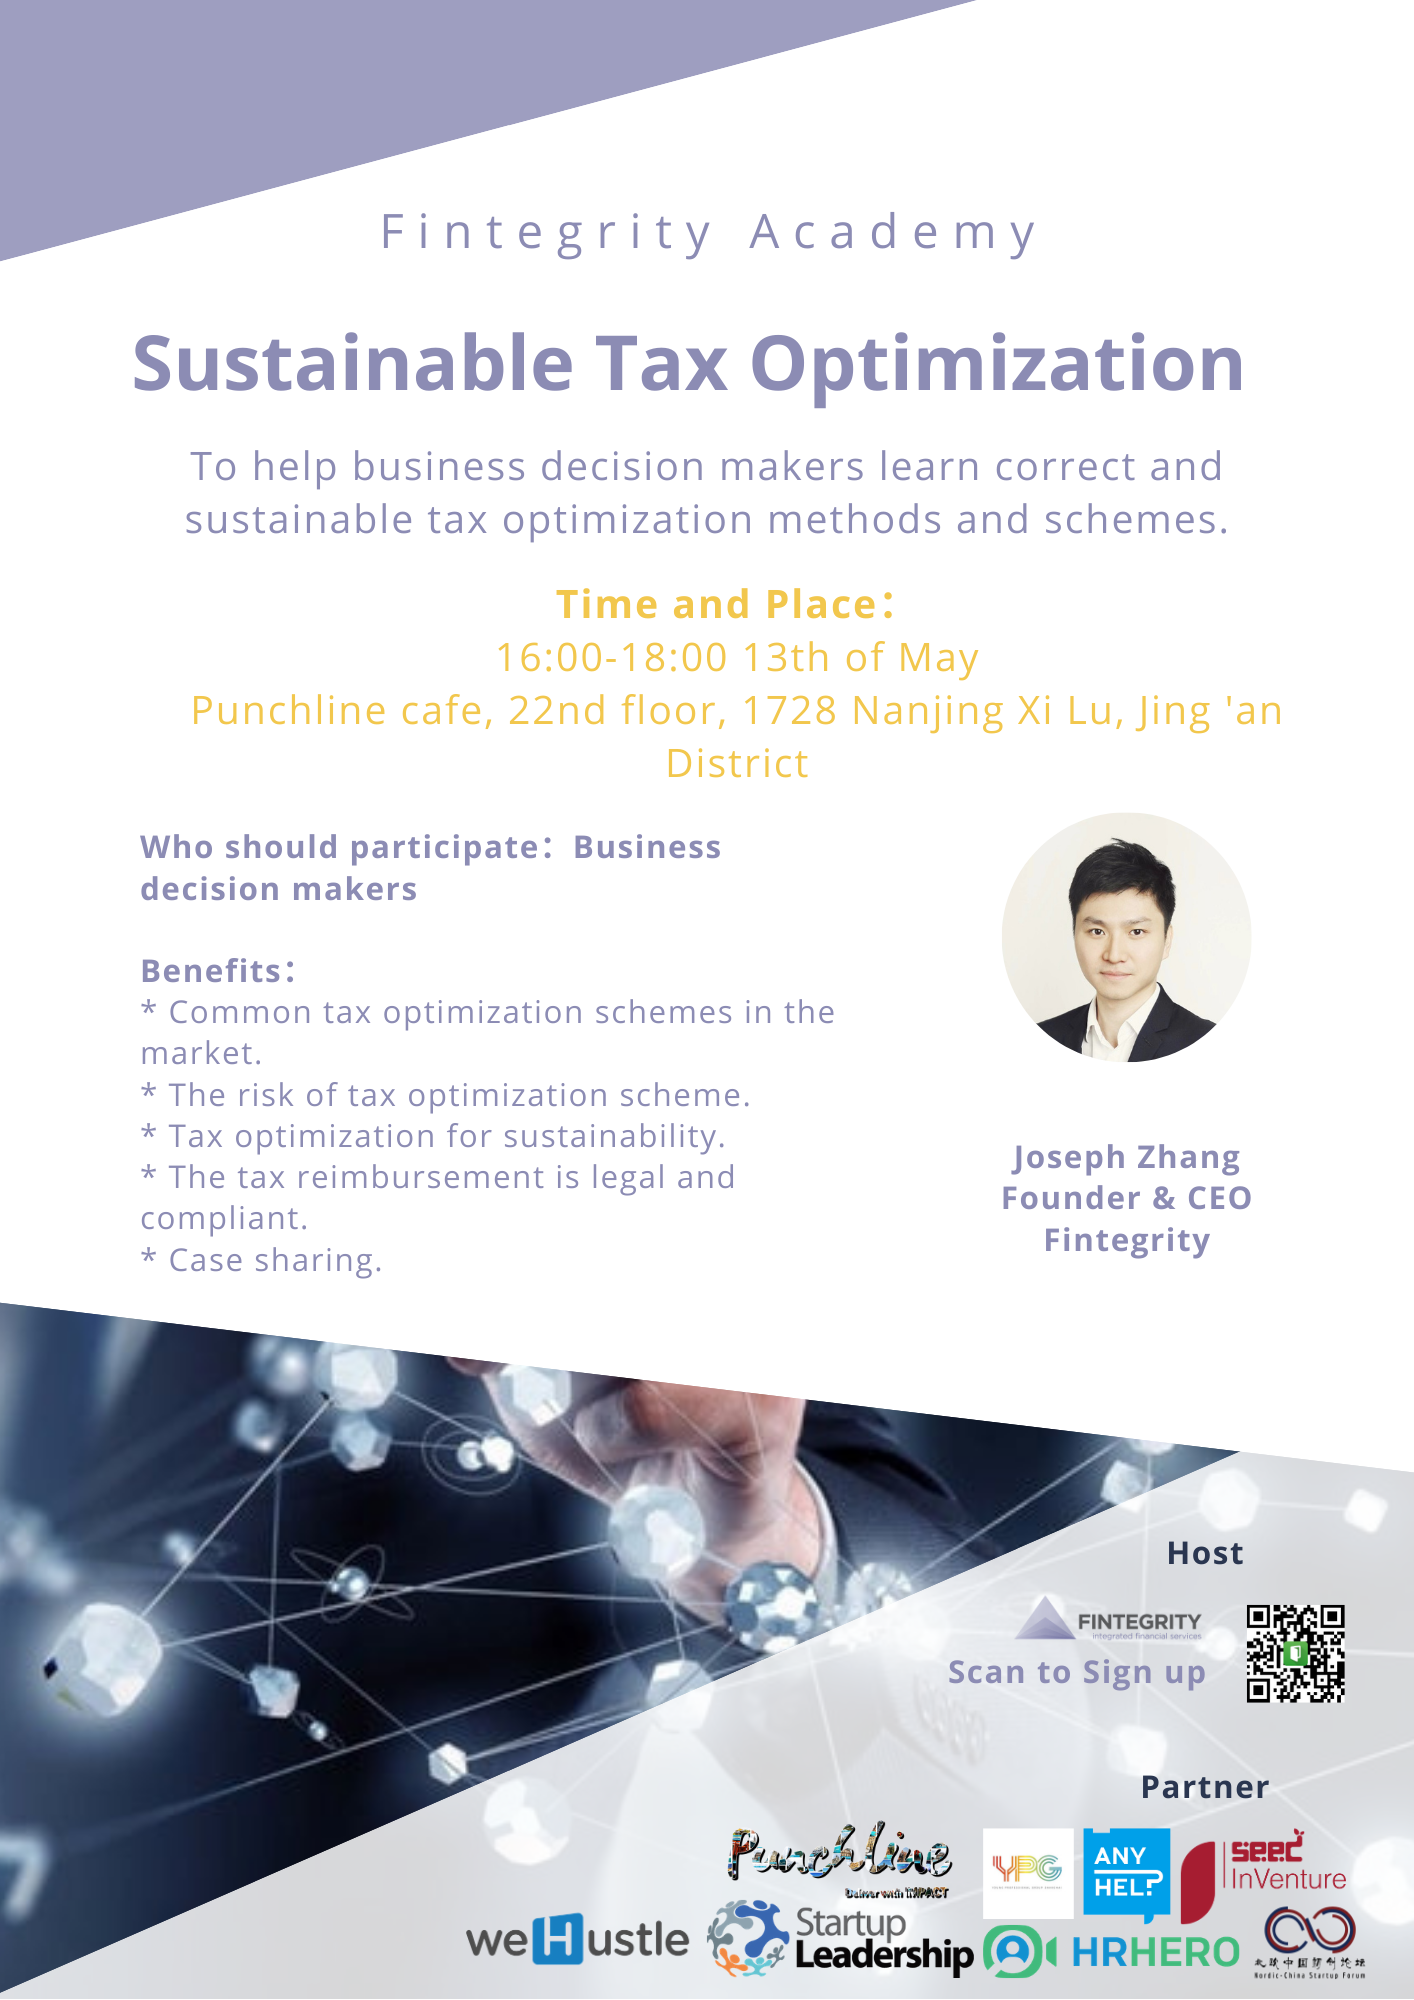 Fintegrity Academy: Sustainable Tax Optimization | Shanghai Events